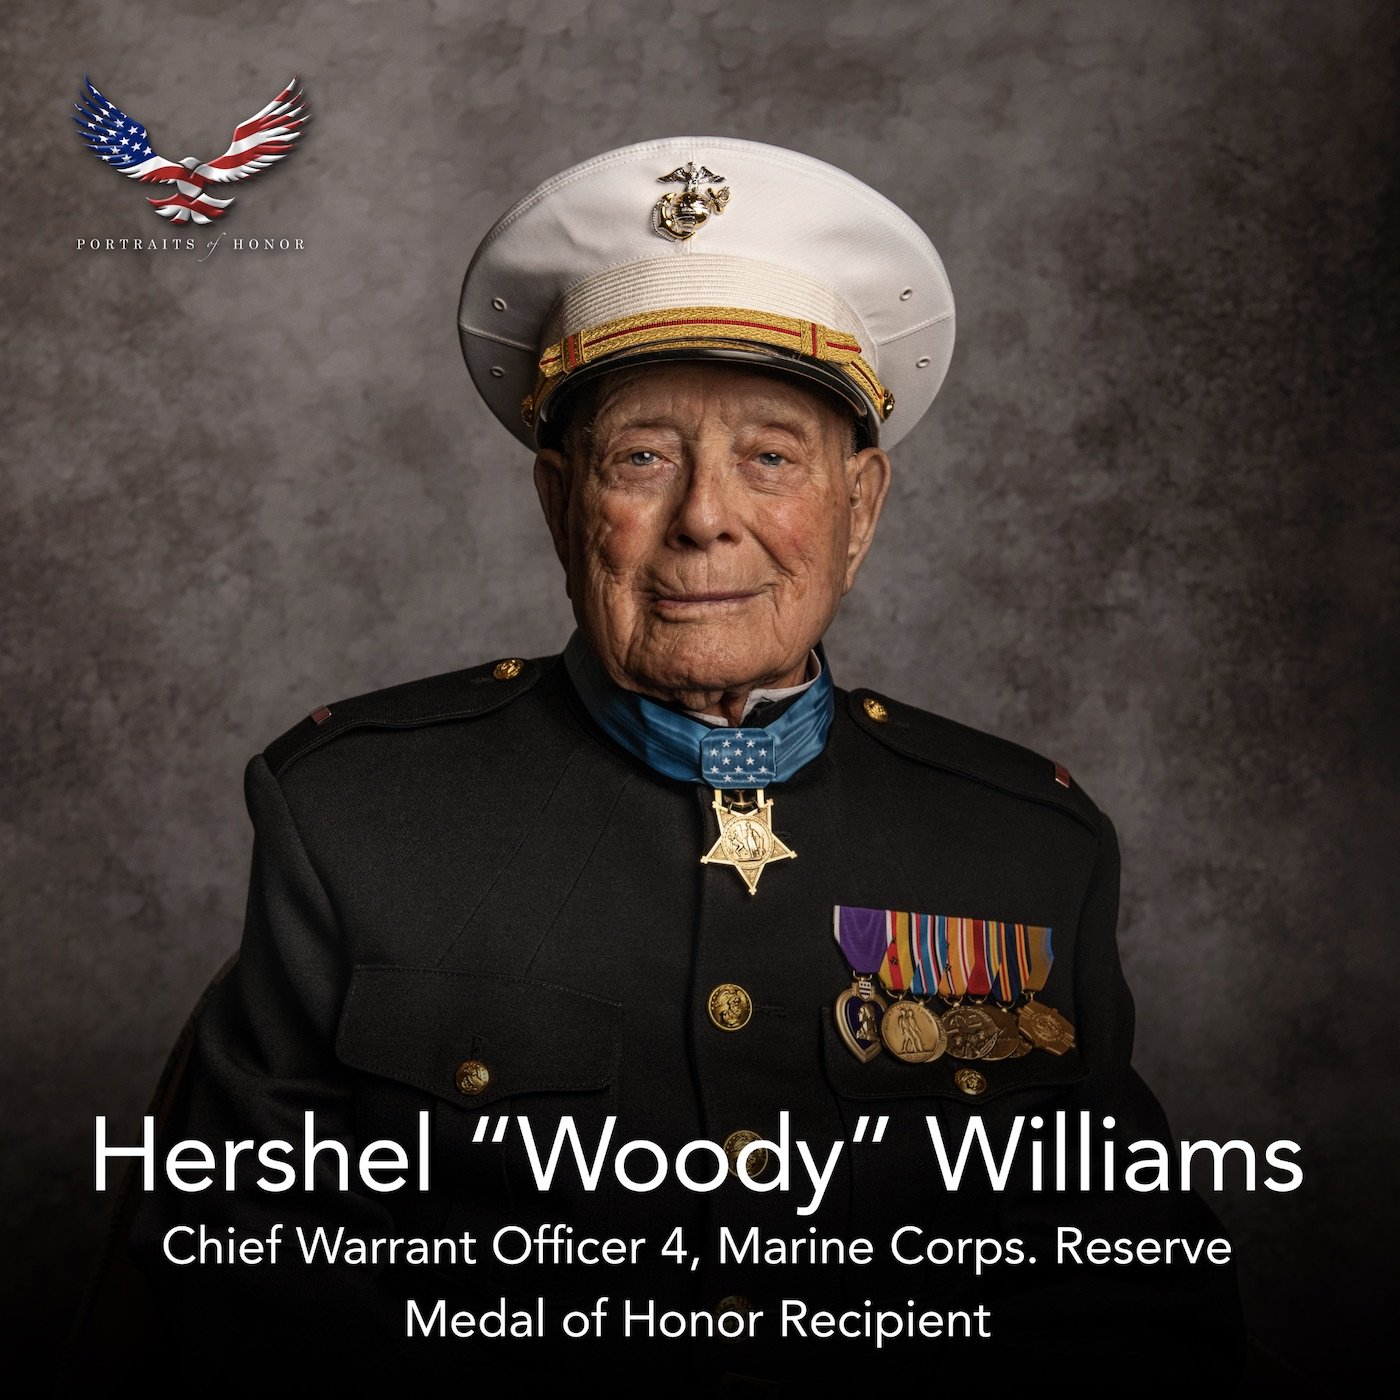 Hershel "Woody" Williams